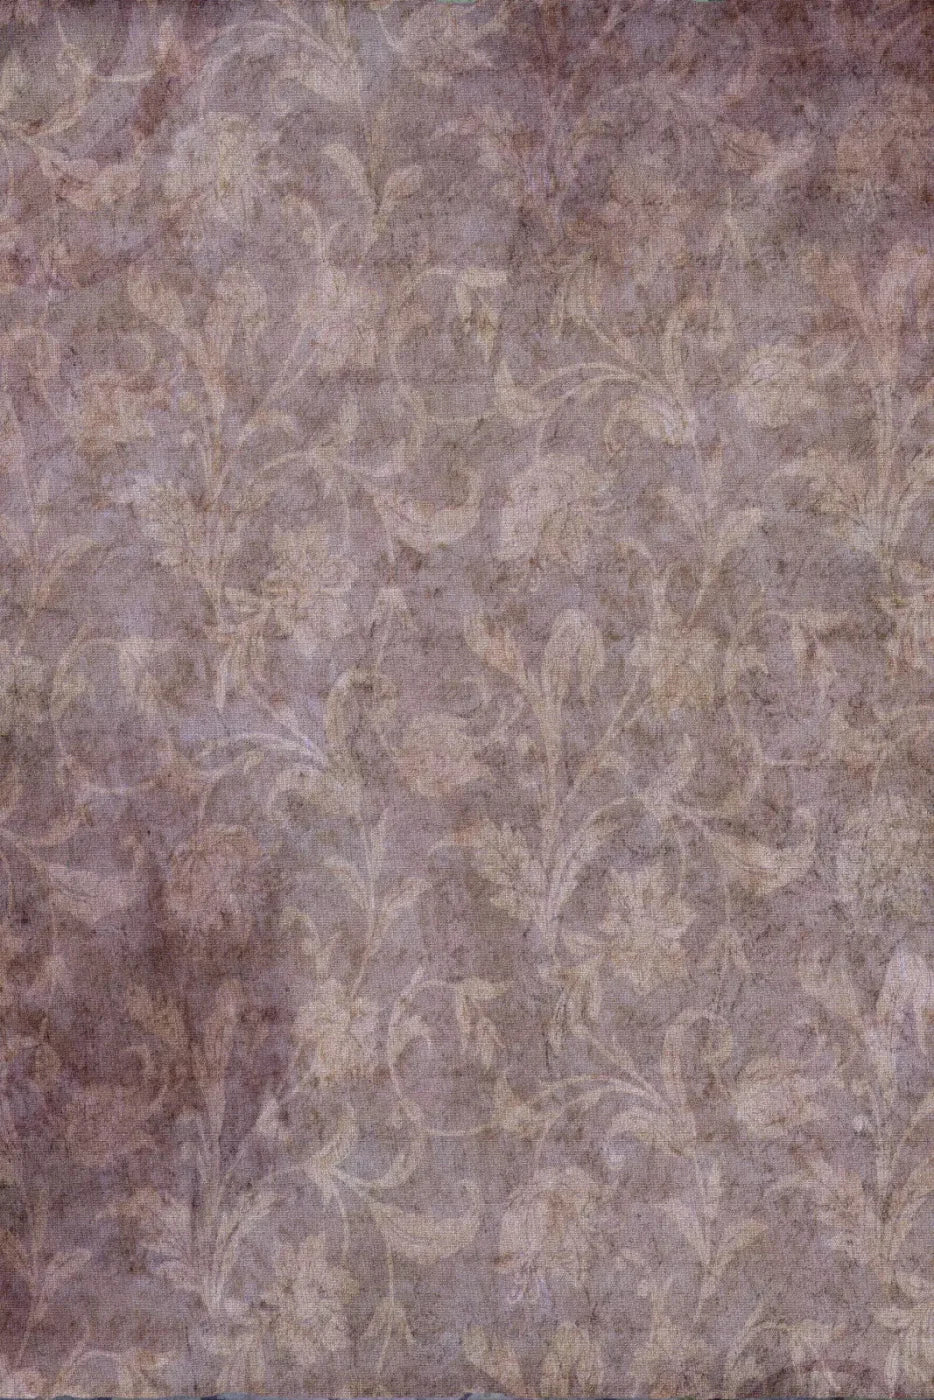 Ambrose 4X5 Rubbermat Floor ( 48 X 60 Inch ) Backdrop